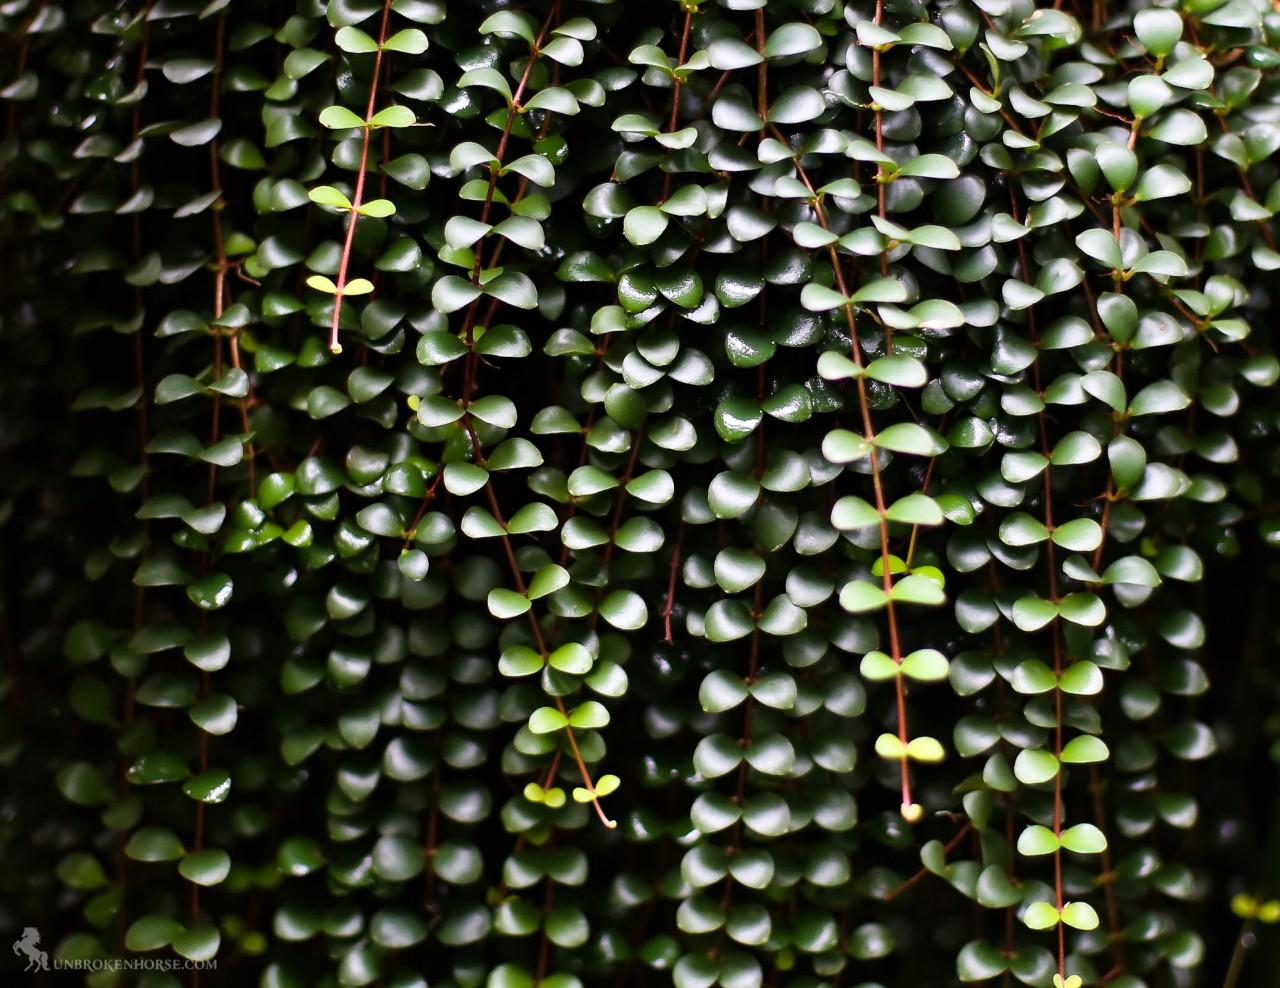 Beautiful strands of hanging leaves like dark jade.